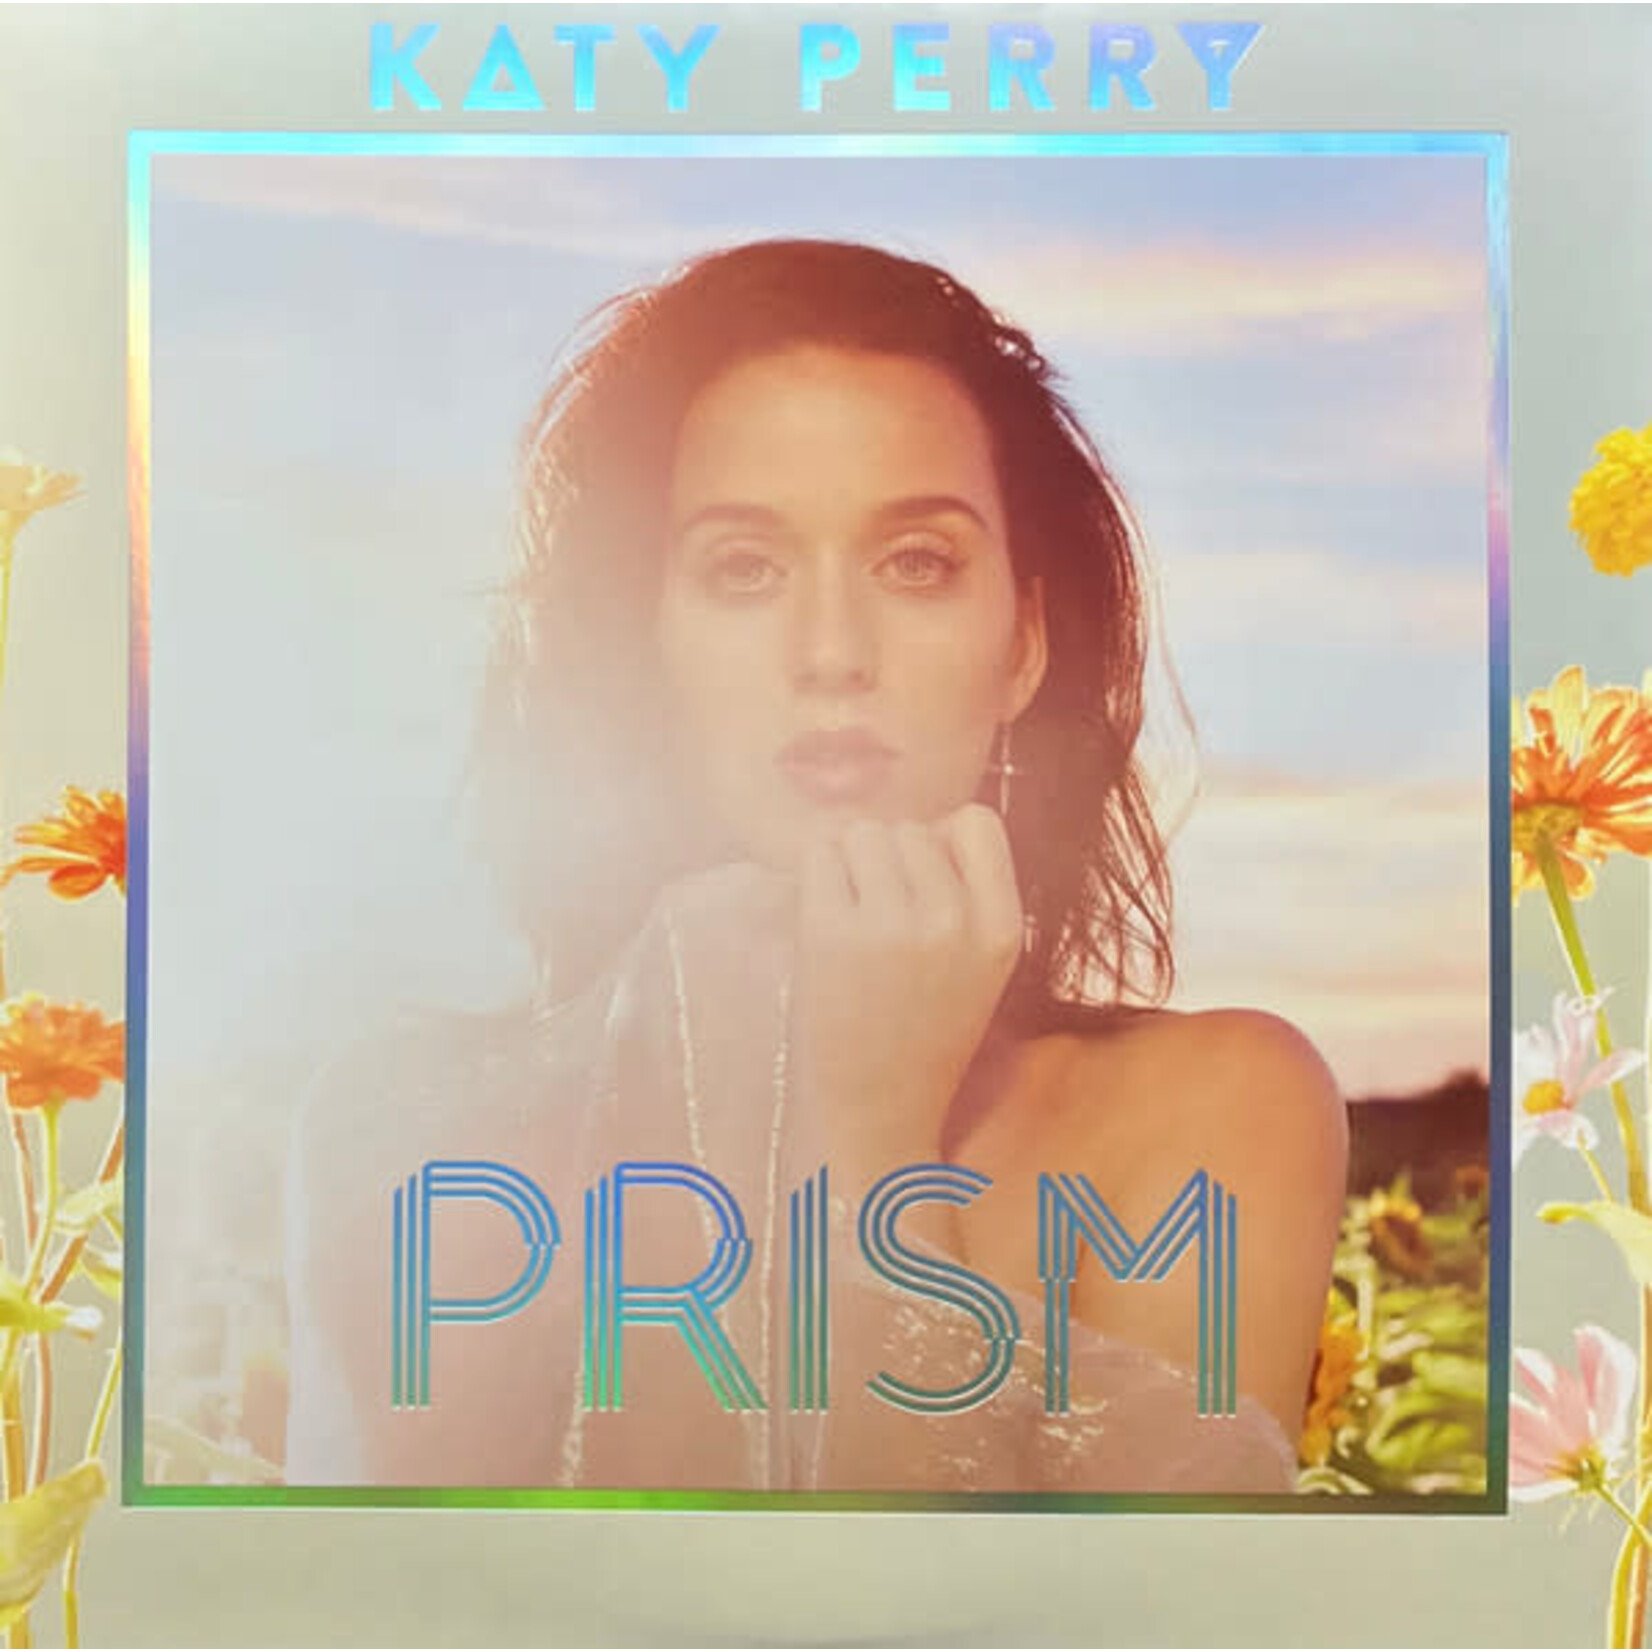 Capitol Katy Perry - Prism (2LP) [Prismatic Splatter]